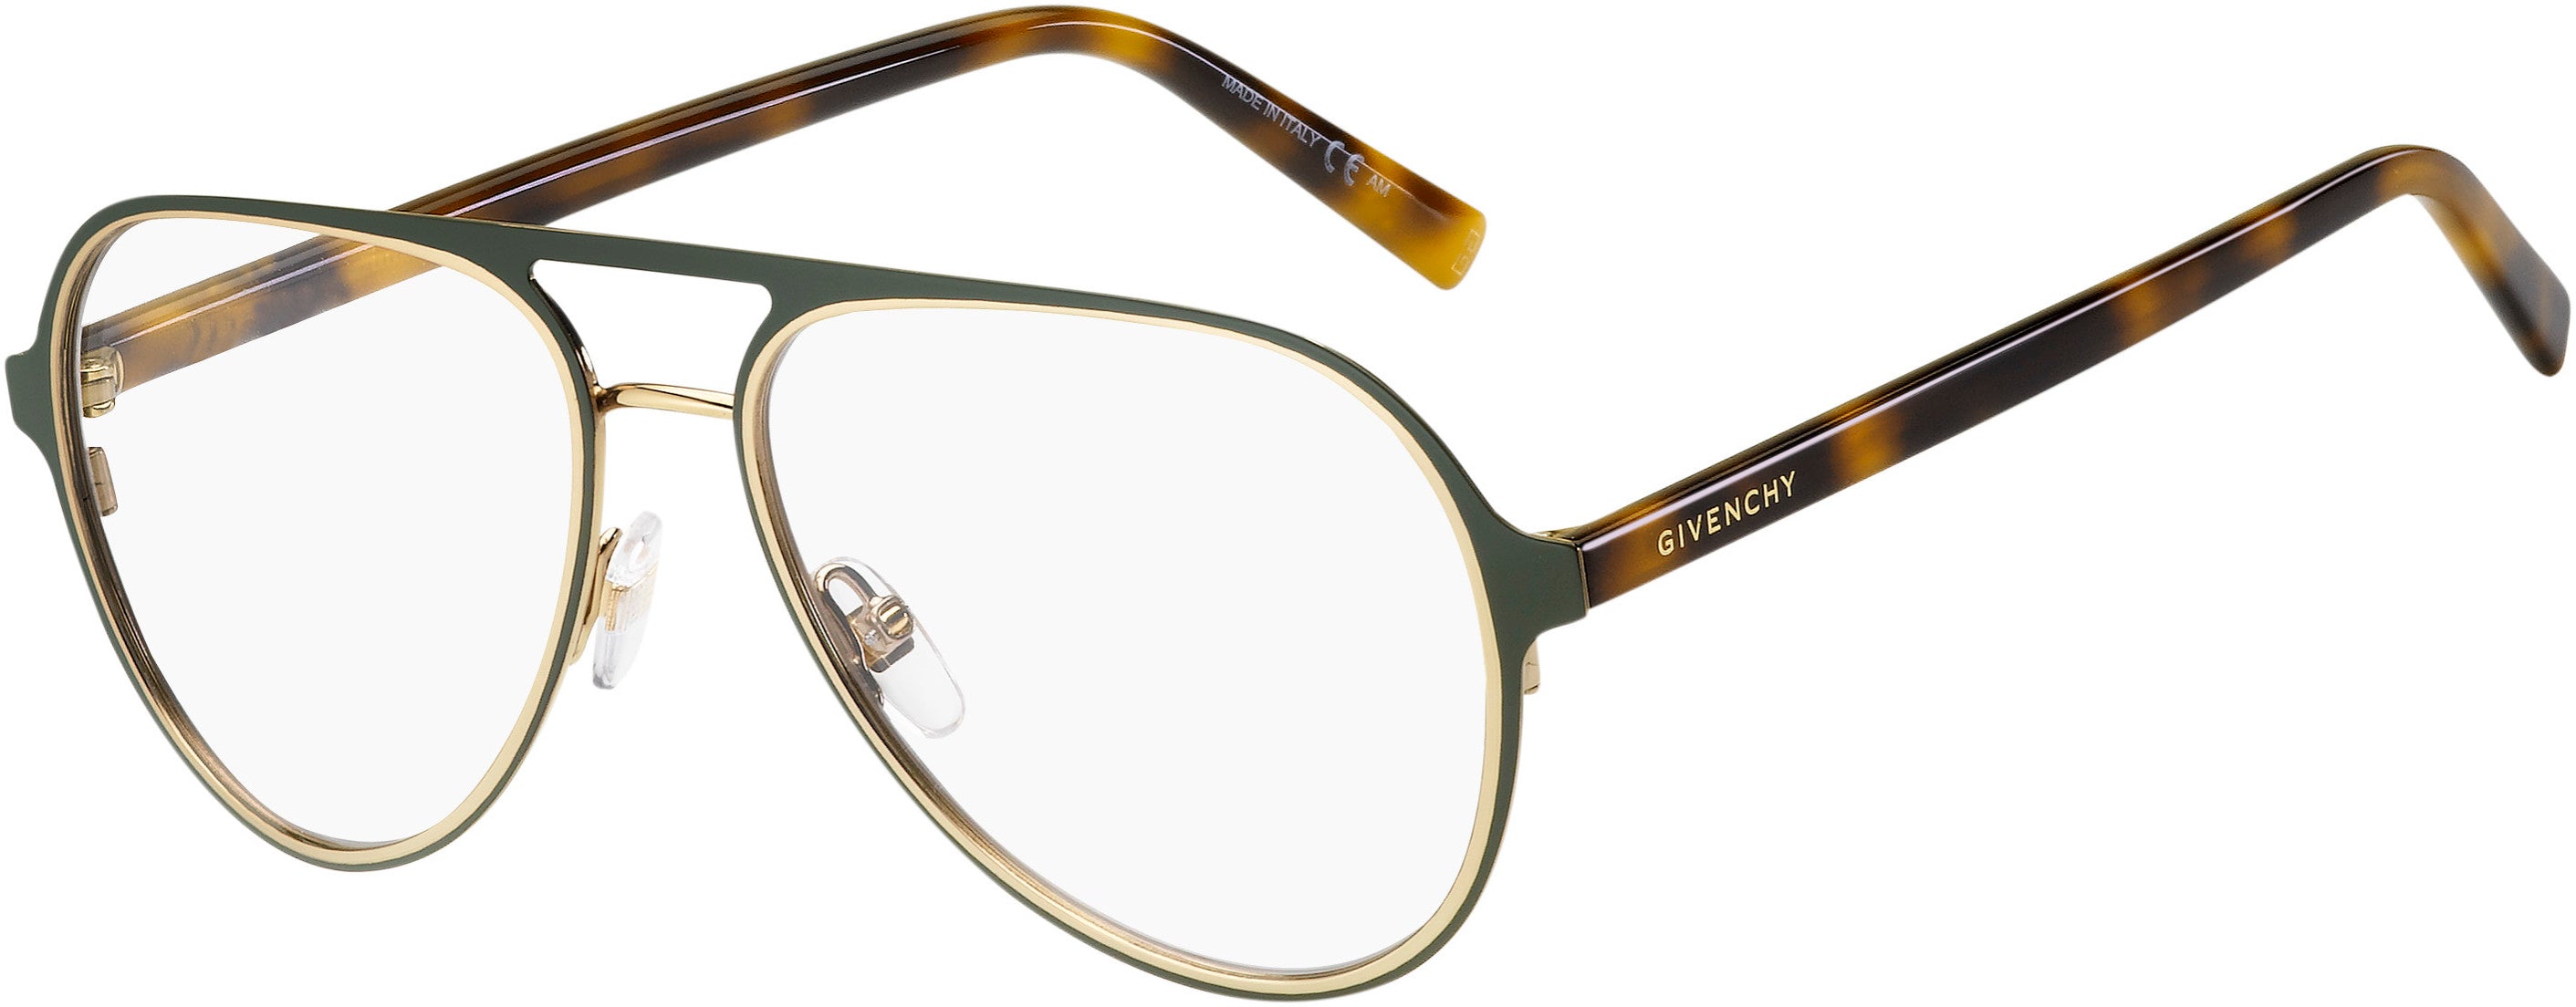  Givenchy 0133 Aviator Eyeglasses 0X55-0X55  Copgd Kha (00 Demo Lens)